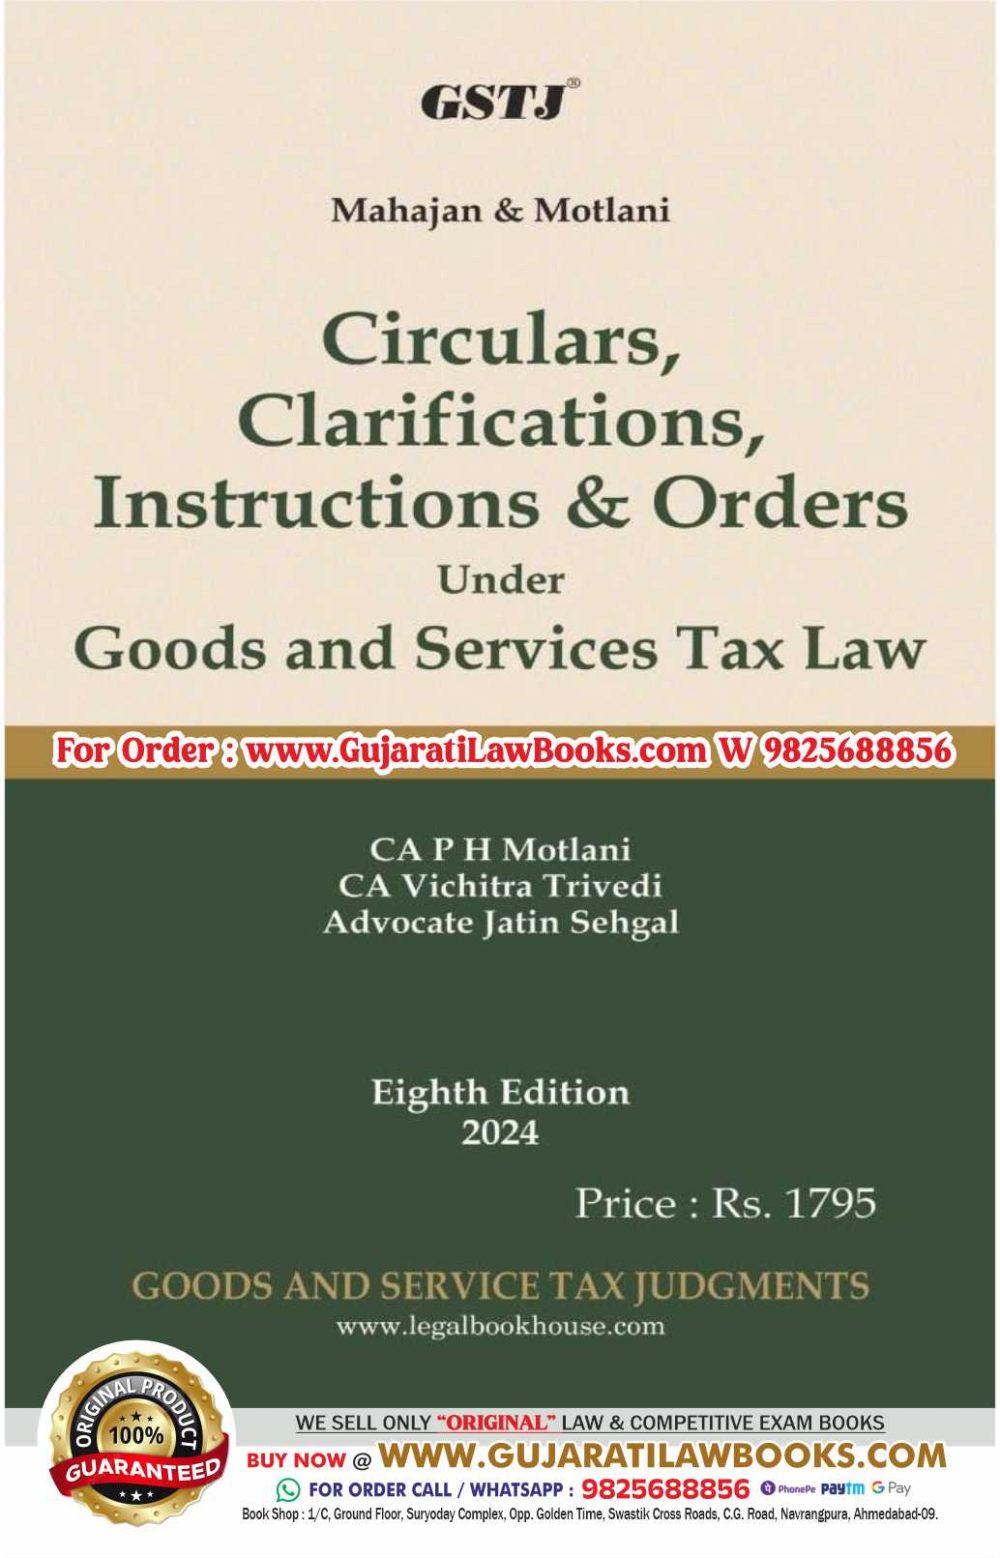 Mahajan & Motlani's - Circulars, Clarifications, Instructions & Orders Under GST Goods and Service Tax Law by CA P H Motlani - Latest 8th Edition 2024